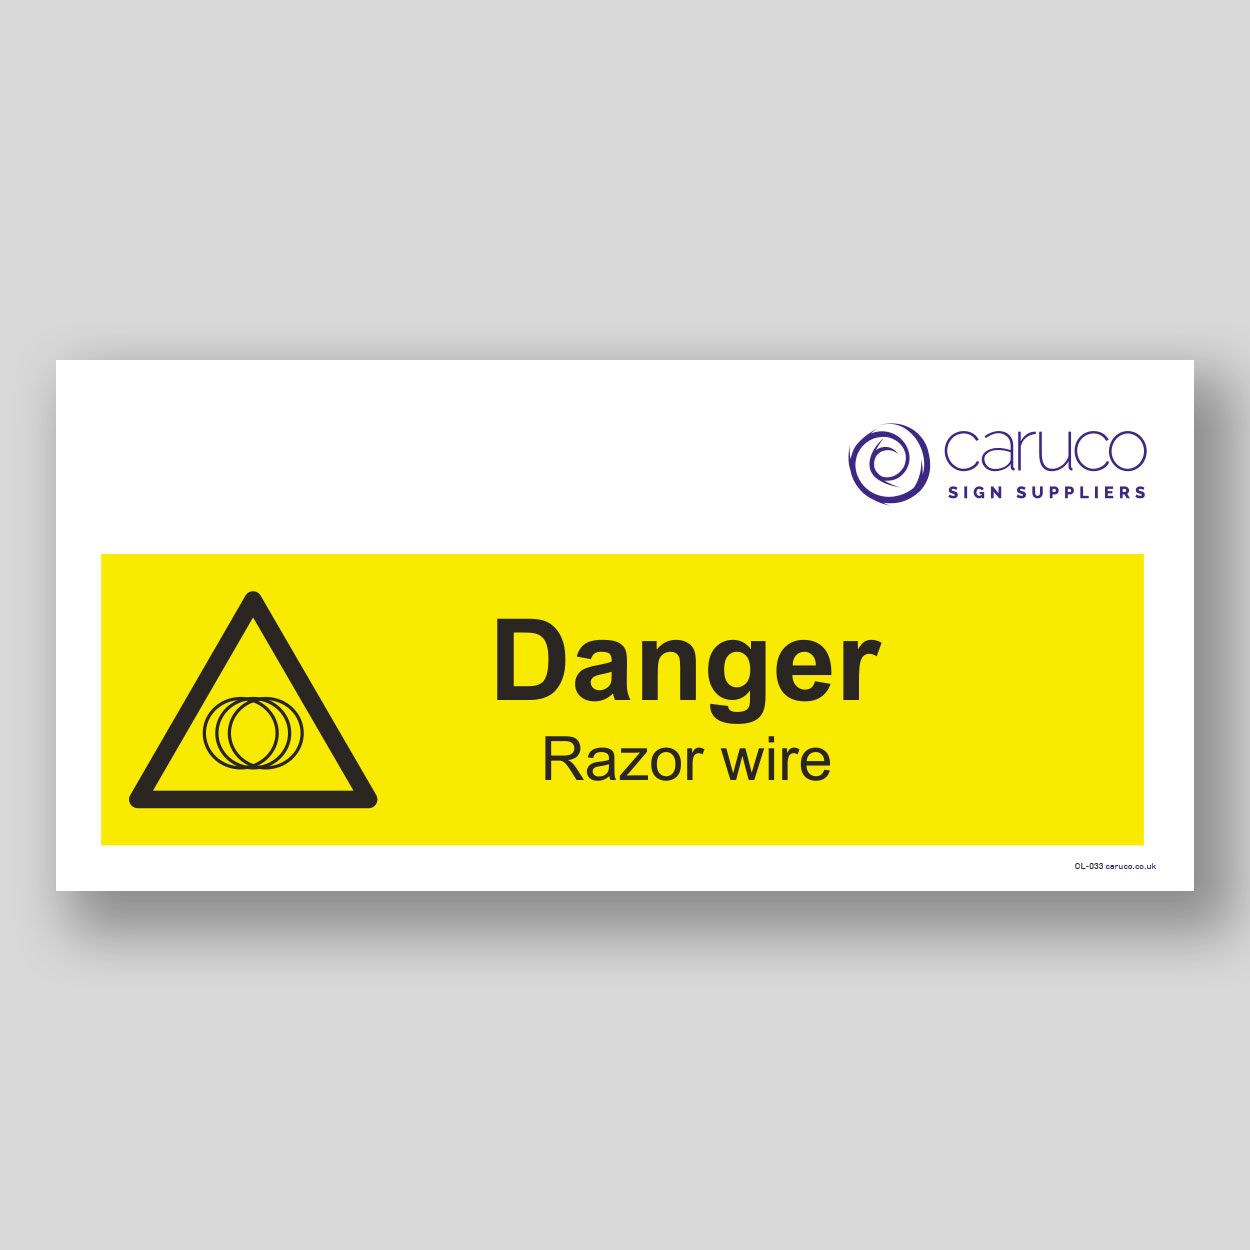 CL-033 Danger - razor wire